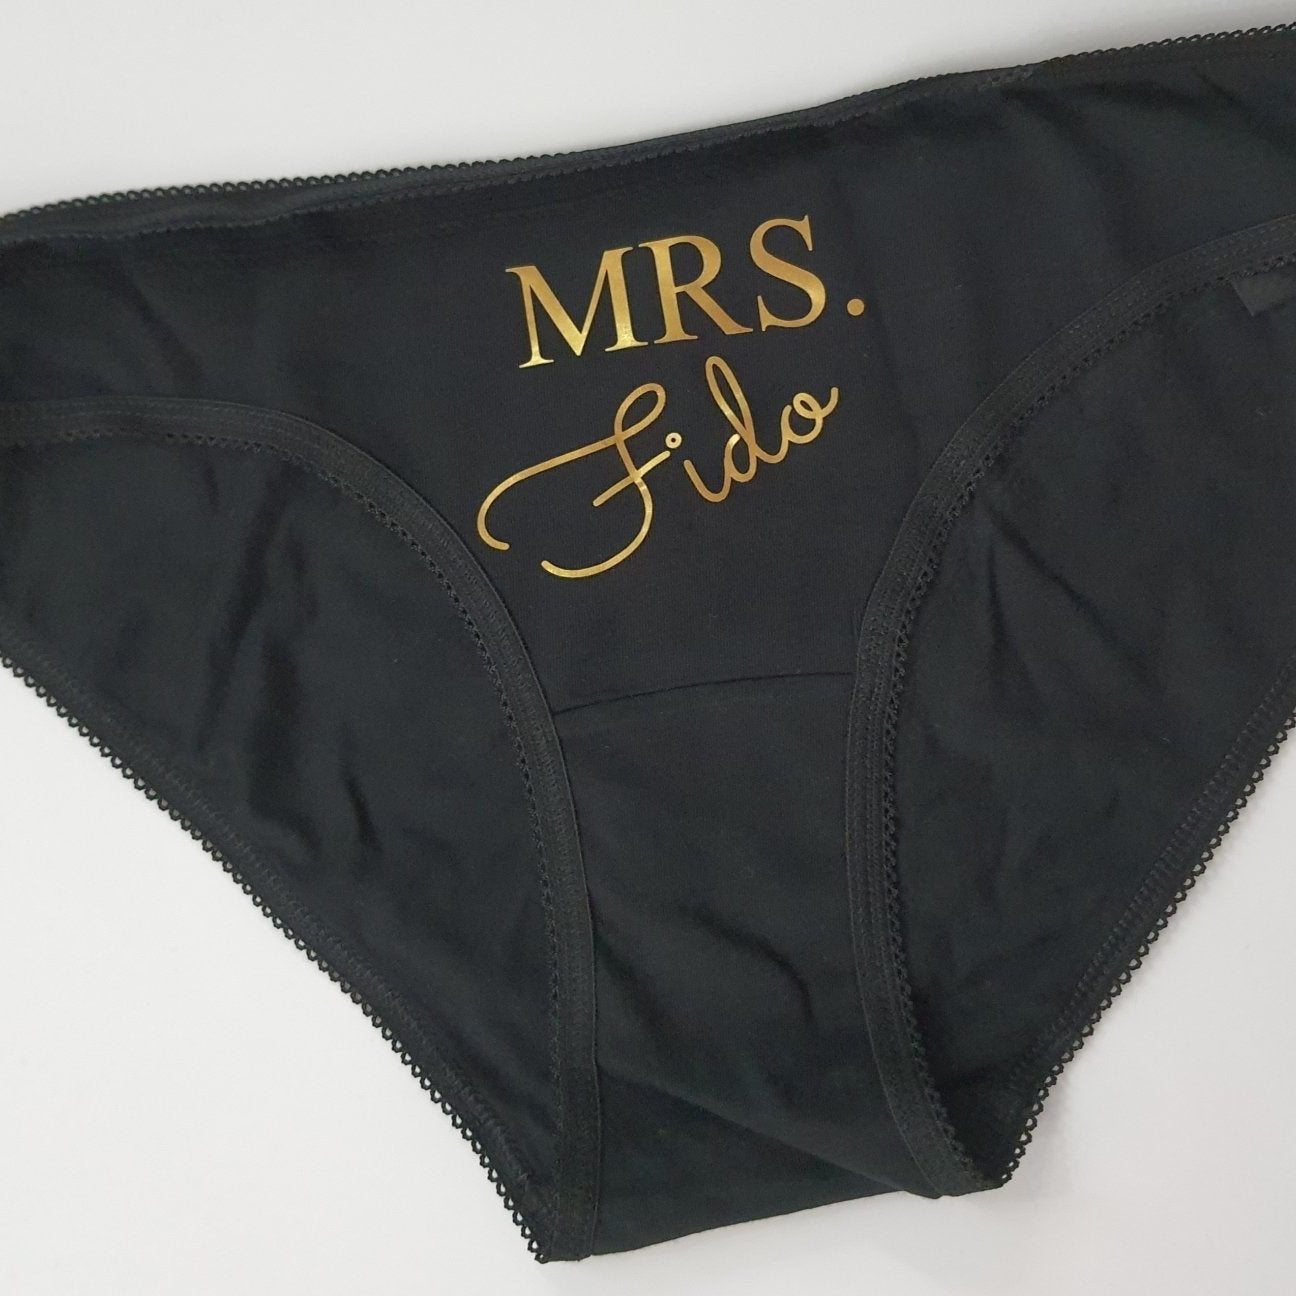 Women underwear - The MRS (Custom Name) - Etba3lly